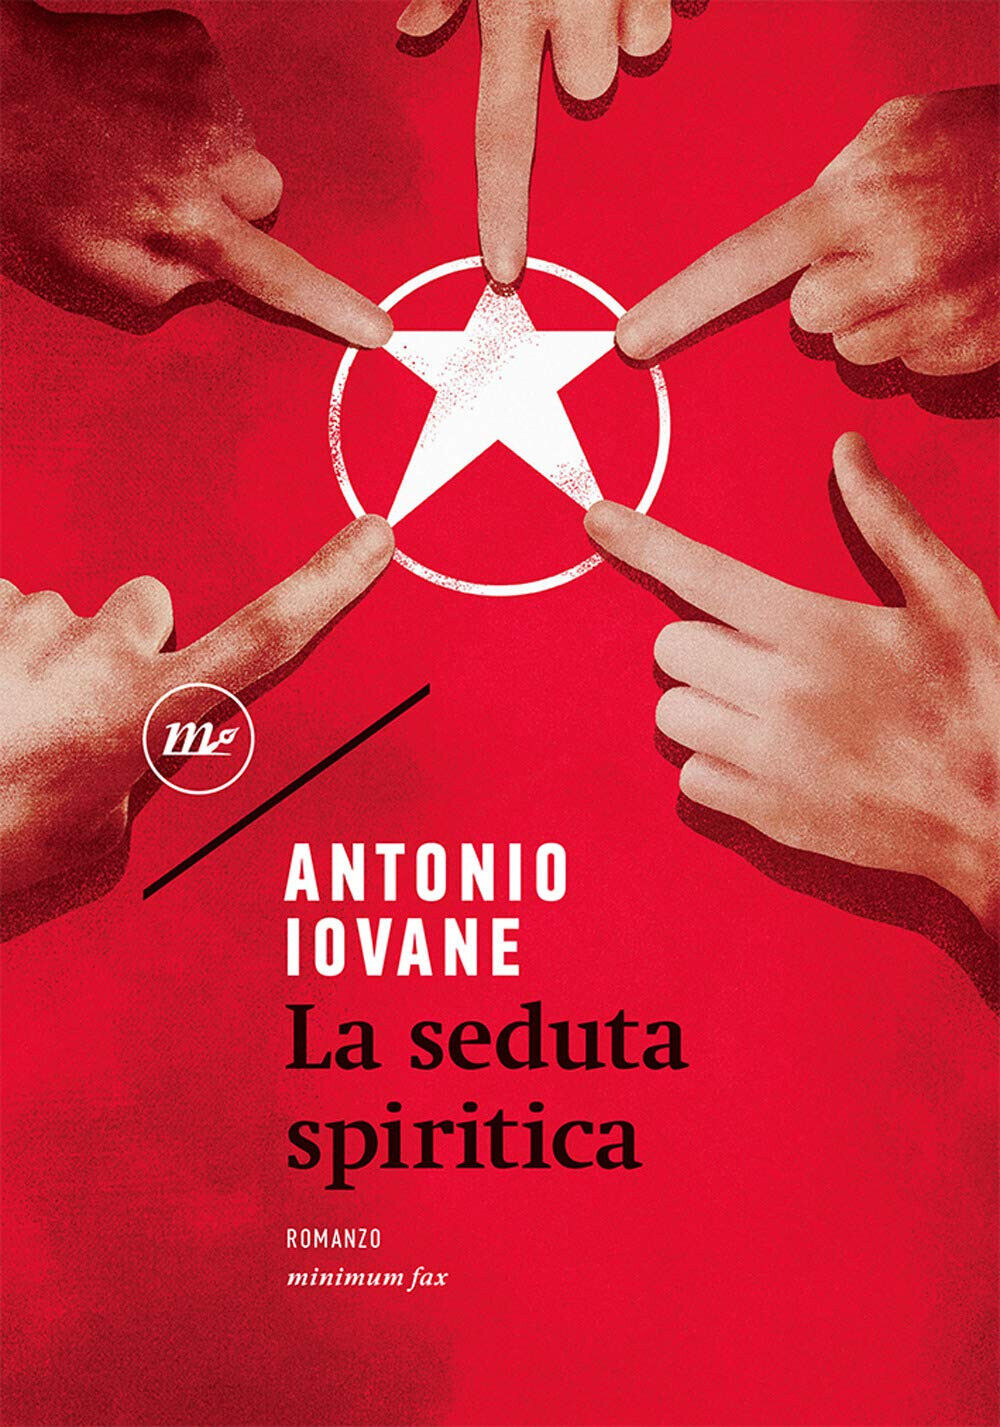 La seduta spiritica - Antonio Iovane - Minimum Fax, 2021 libro usato